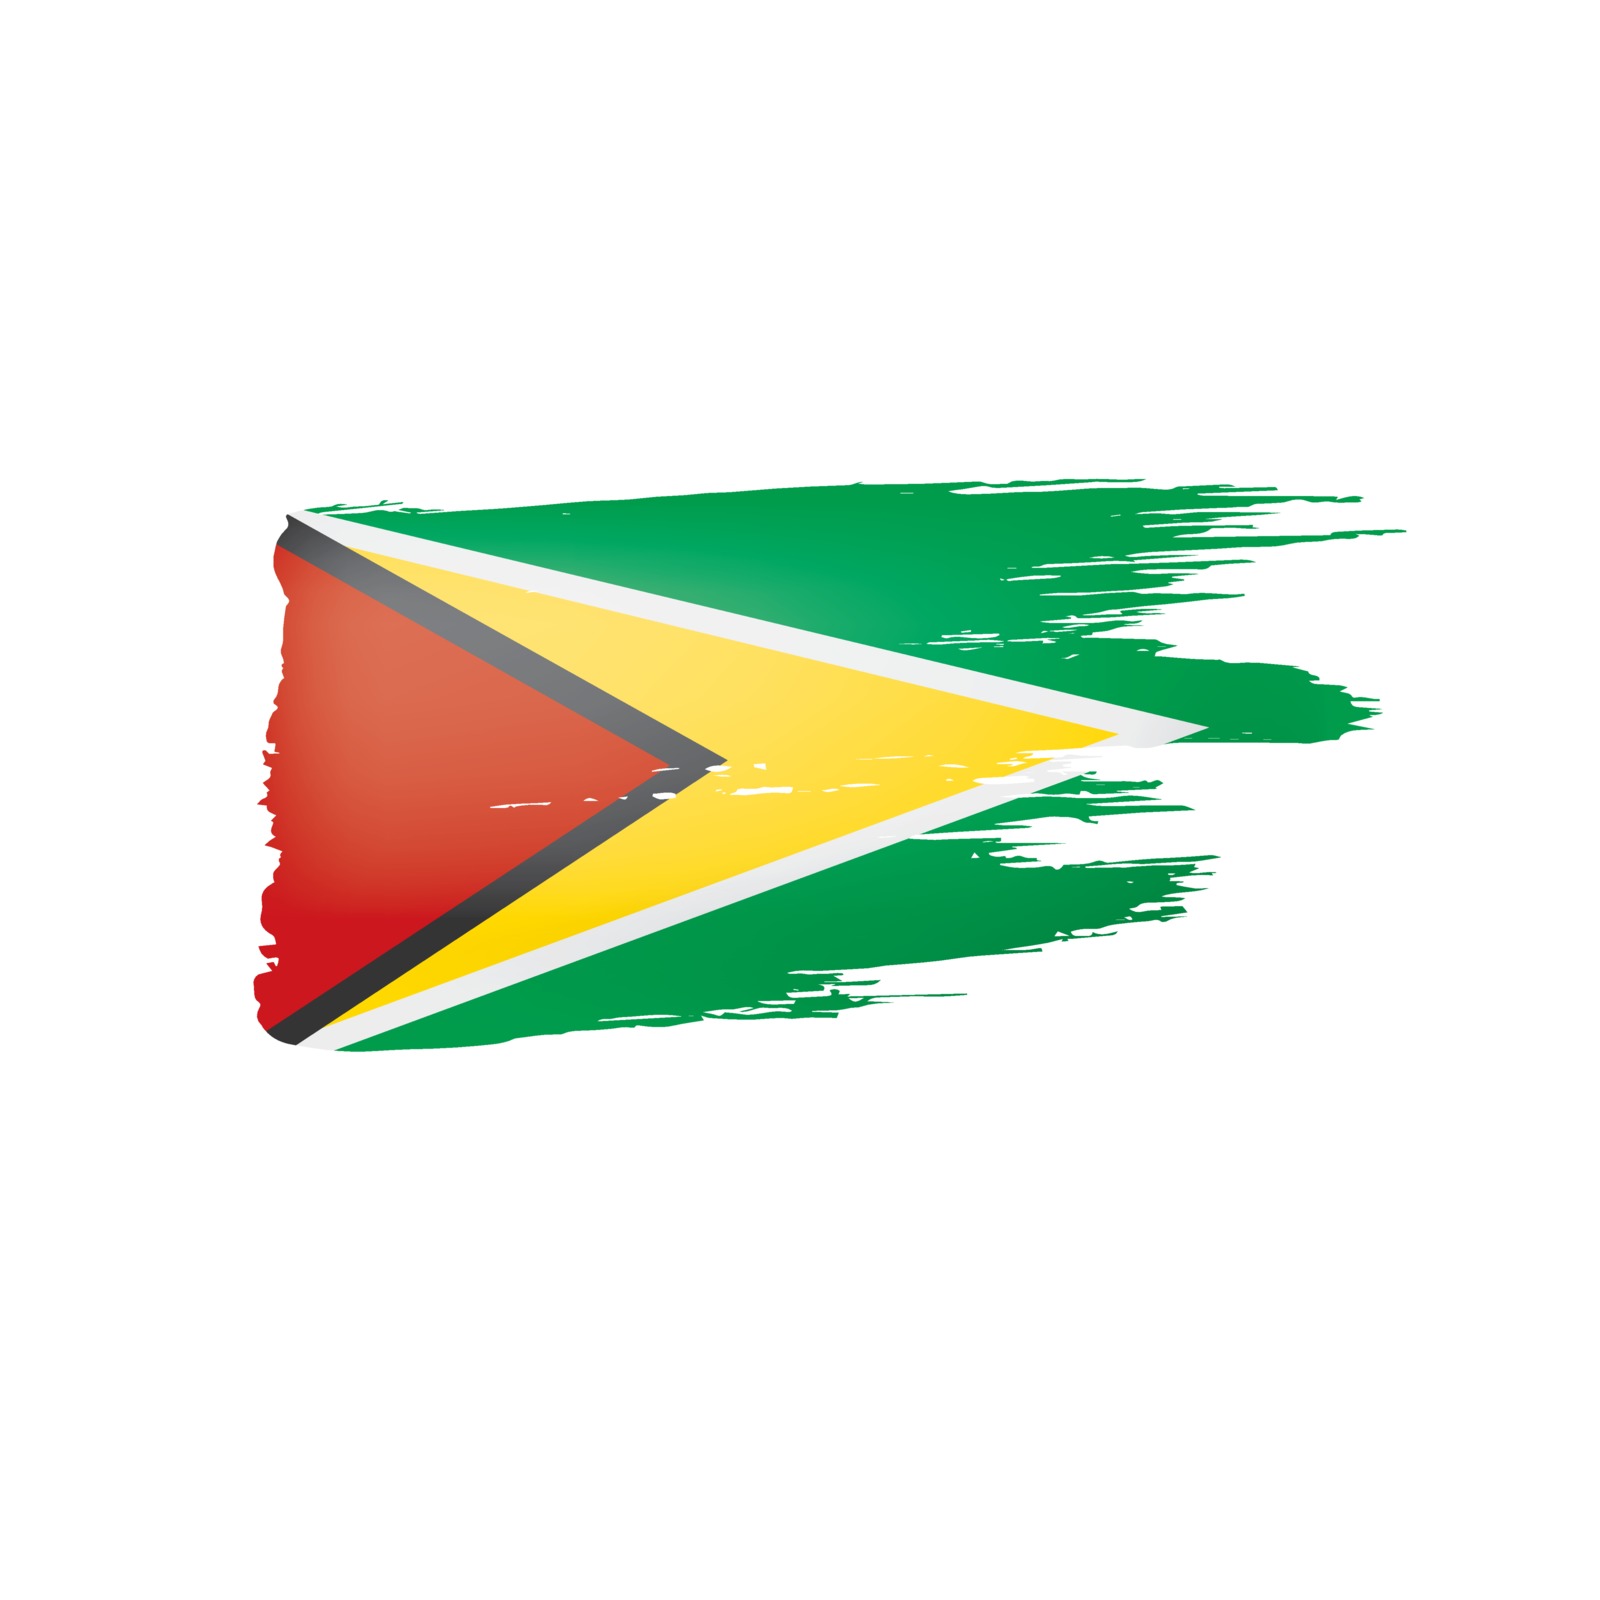 Guyana Flag Vector Illustration On A White Background Stock